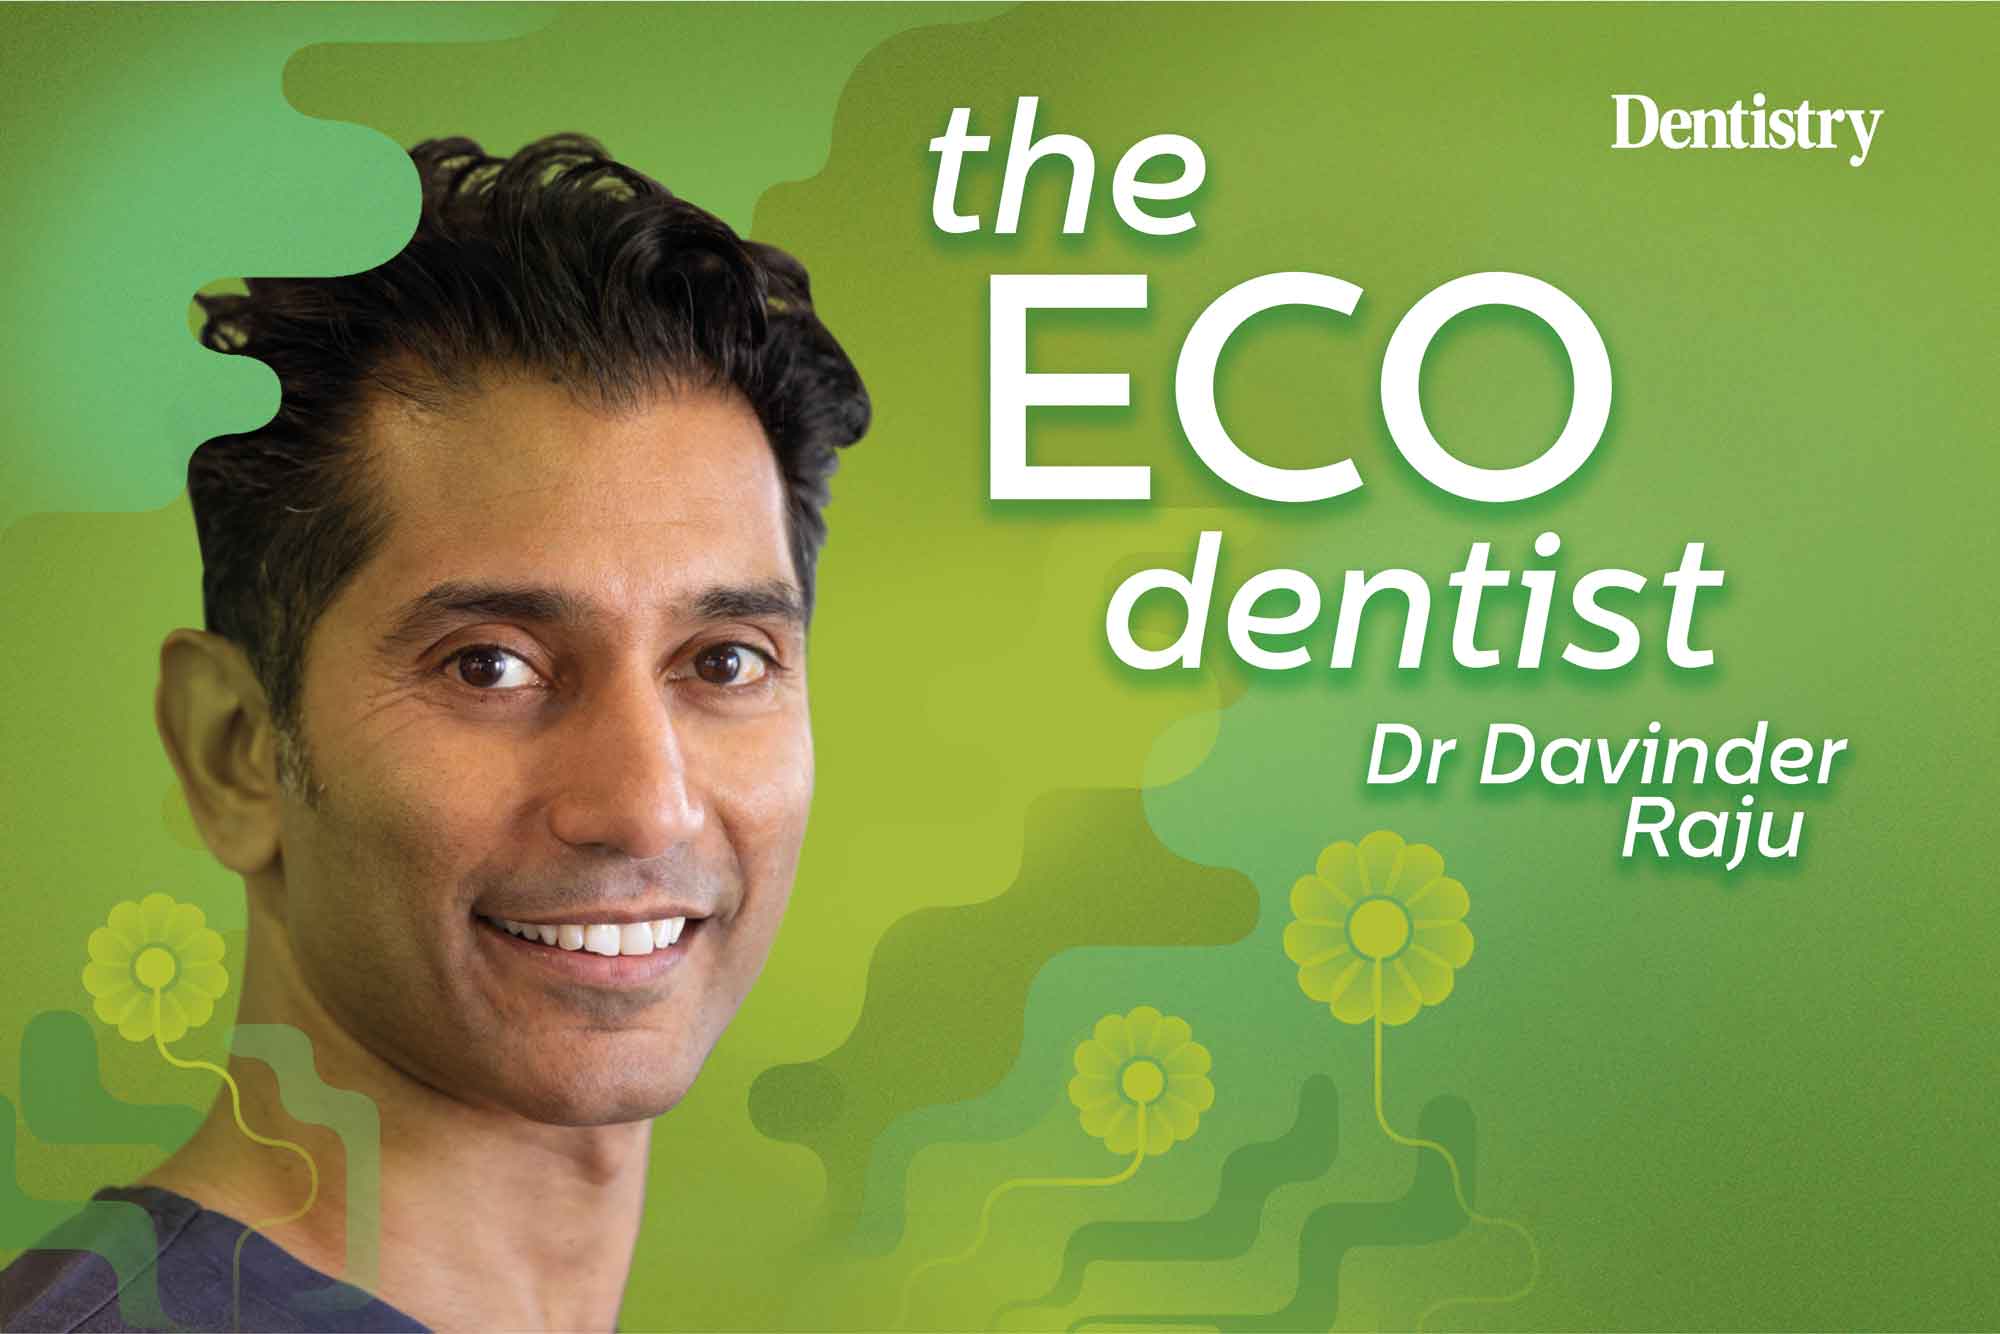 The Eco Dentist minimal intervention reception